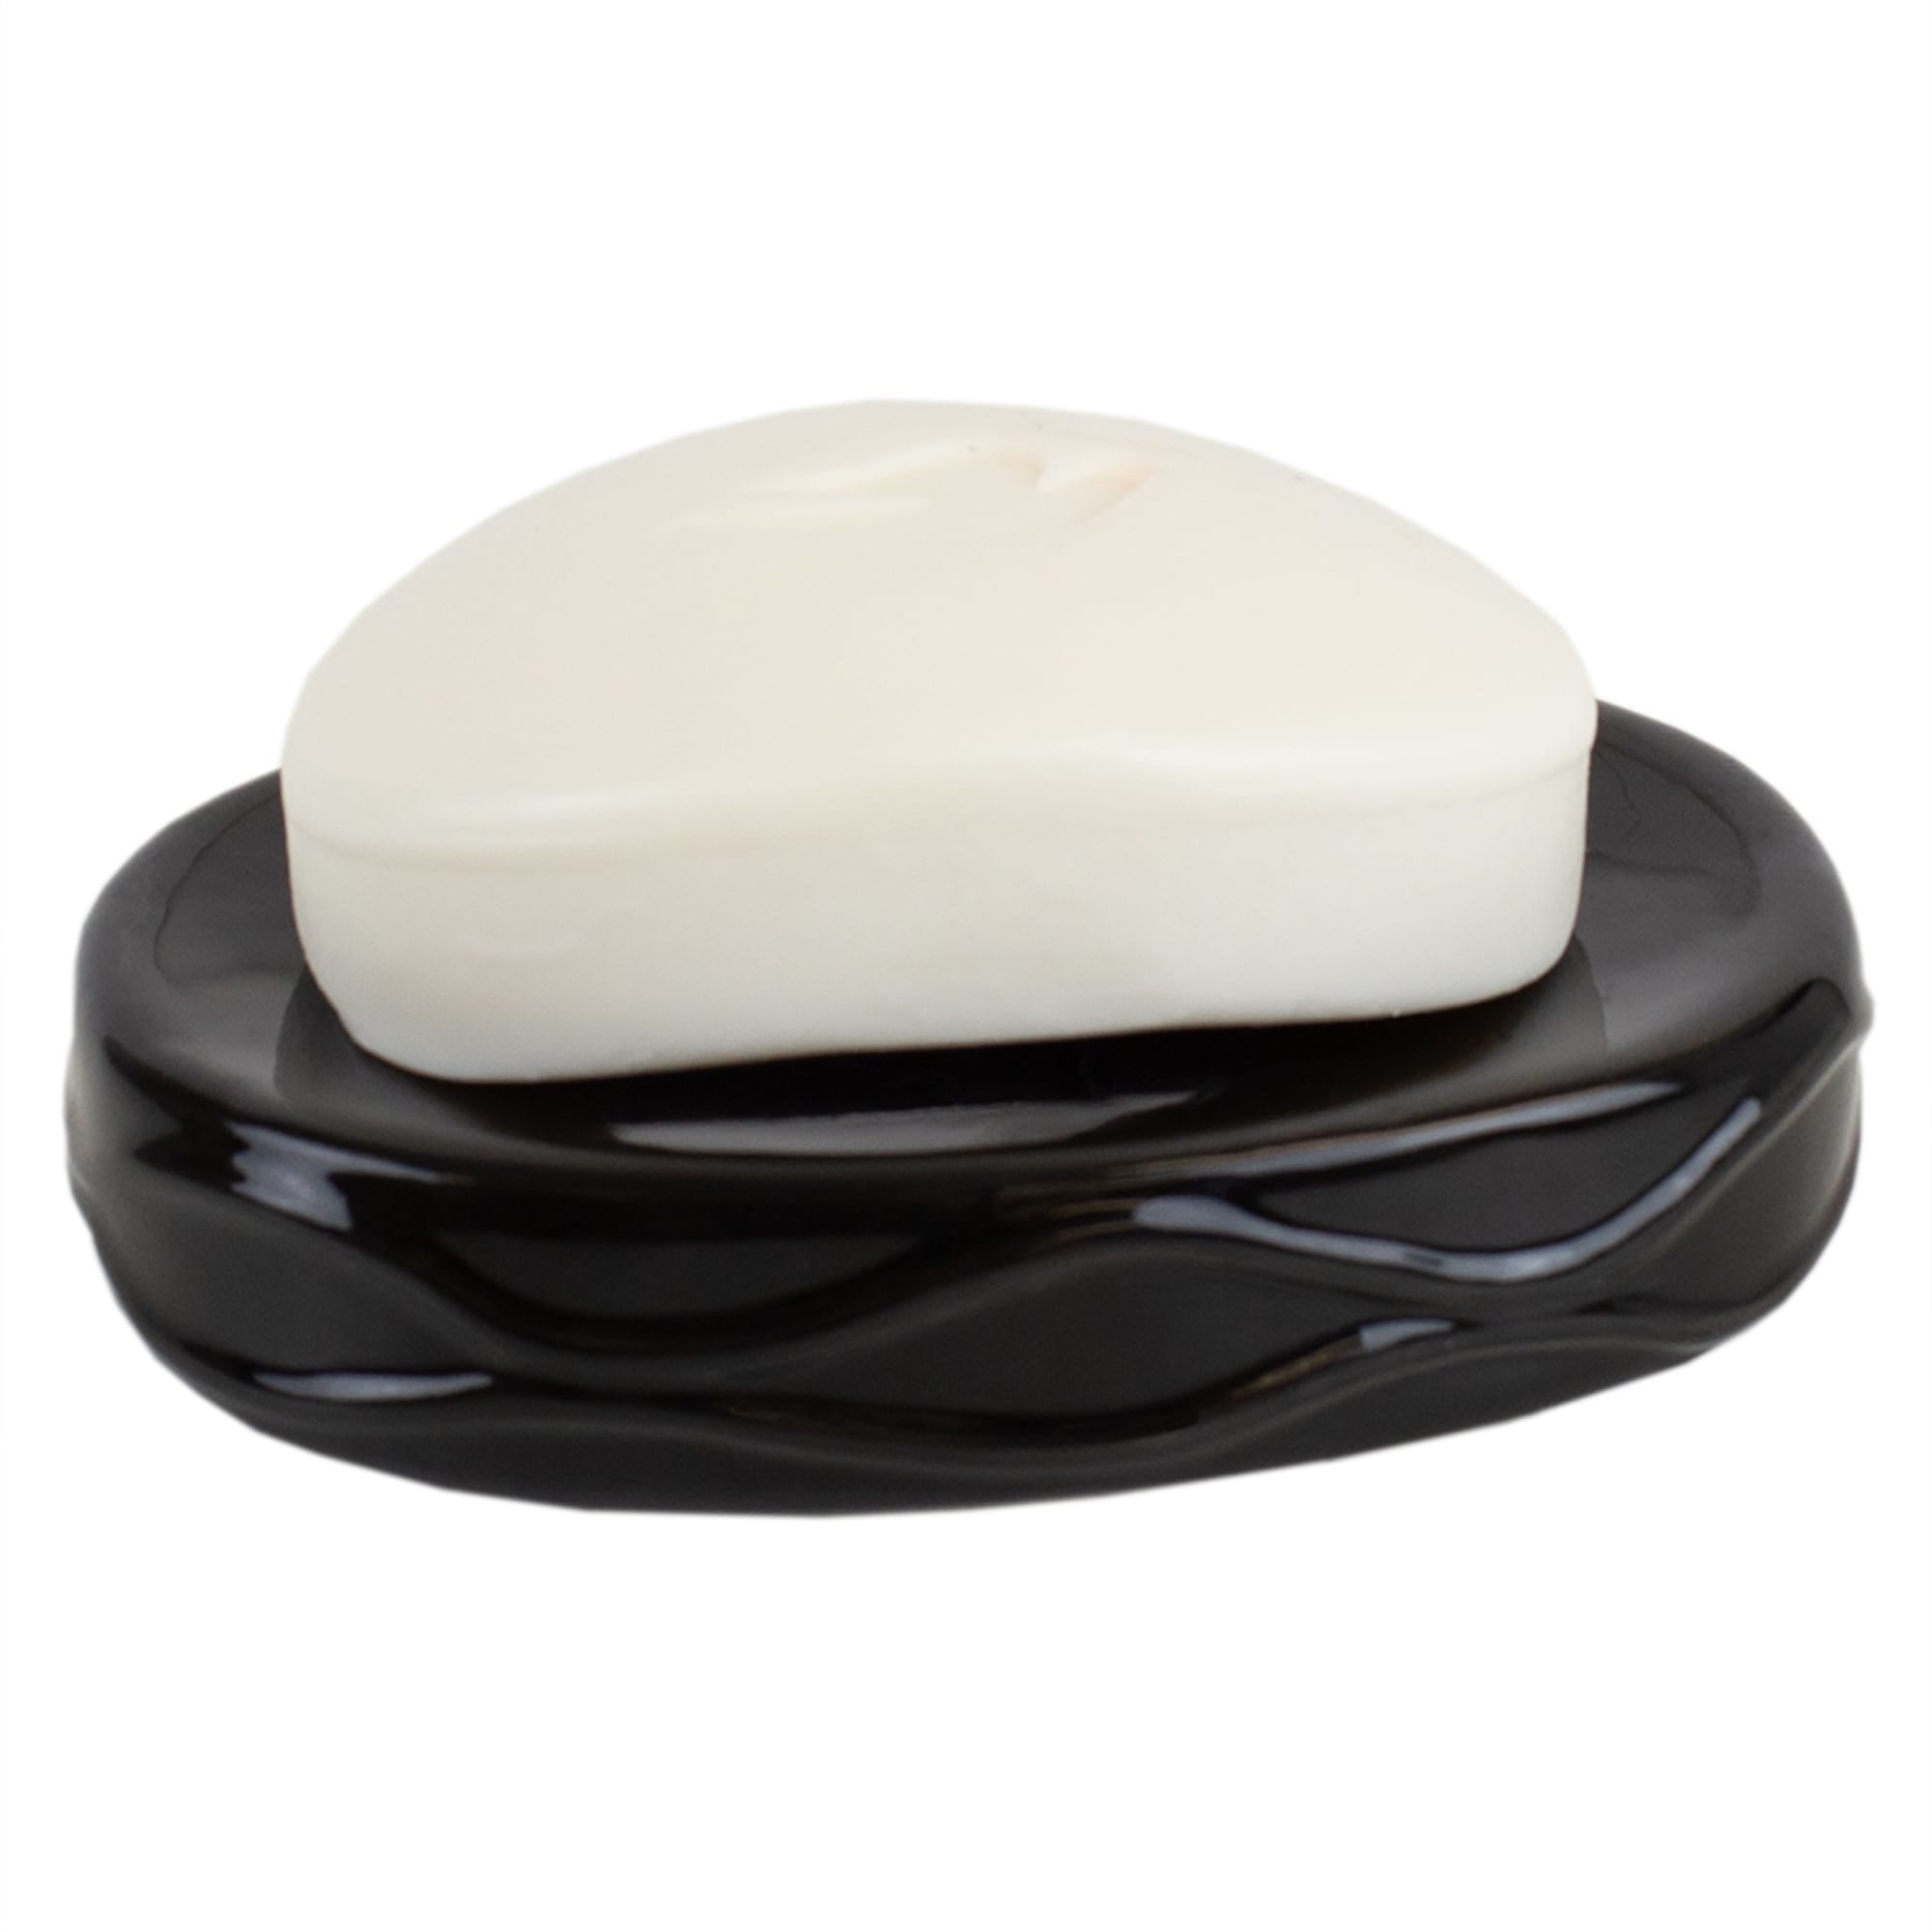 Home Basics Curves 4 Piece Ceramic Bath Accessory Set, Black $10.00 EACH, CASE PACK OF 12